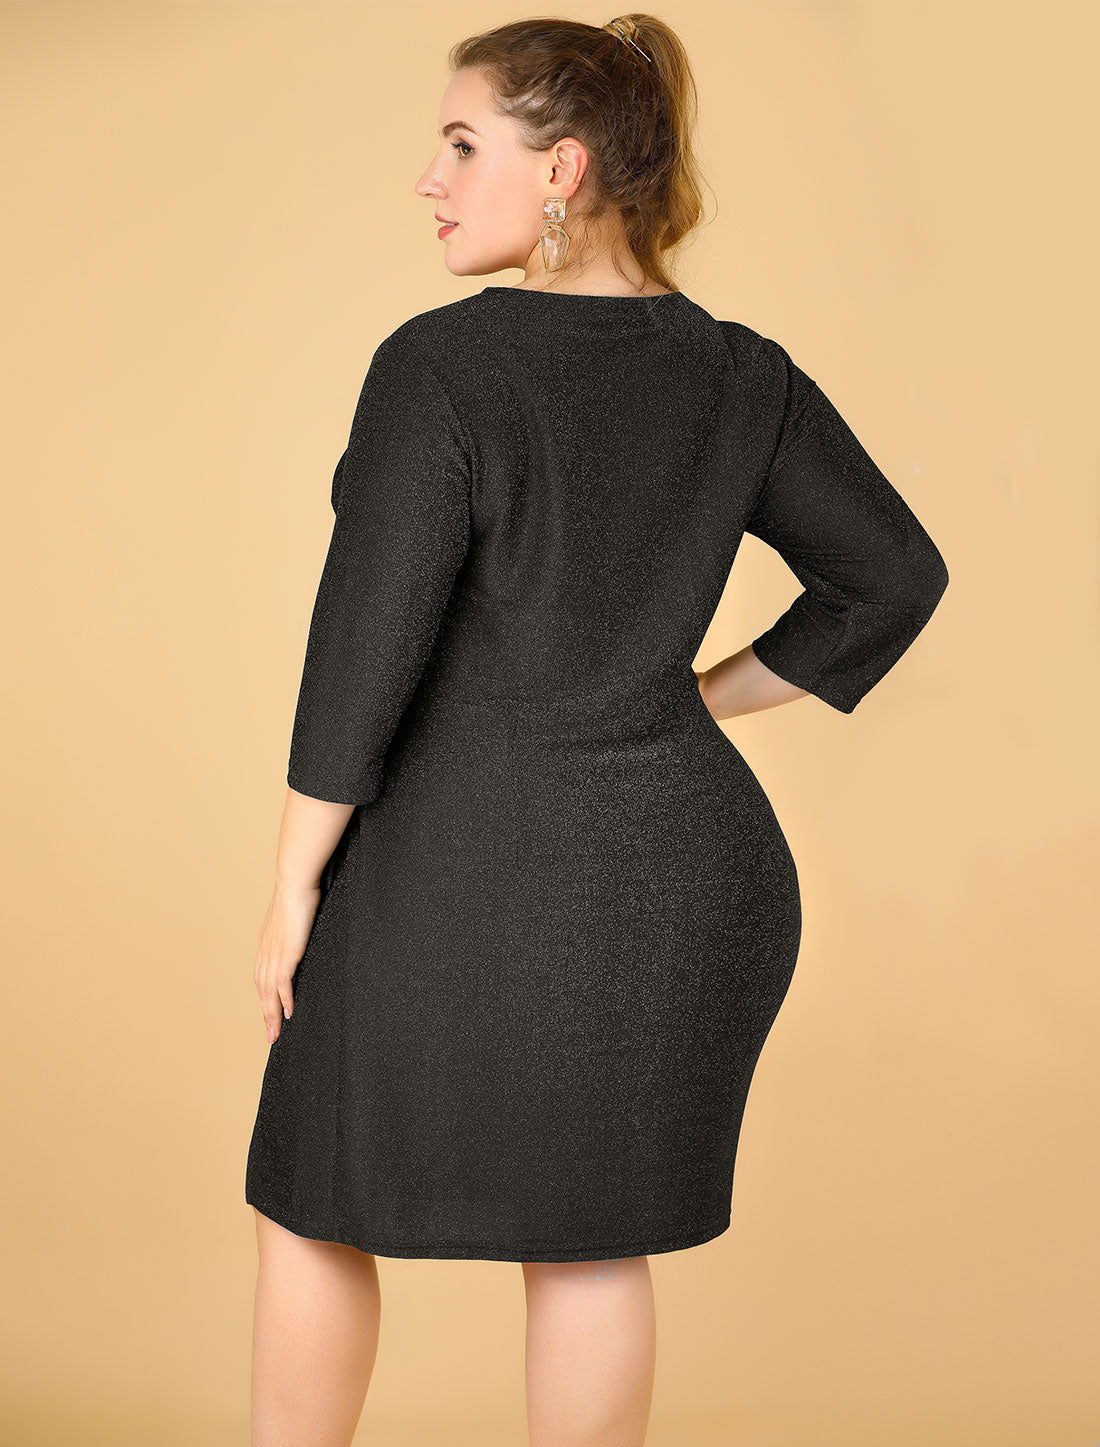 Bublédon Sequin Nylon V Neck 3/4 Sleeve Split Plus Size Dress